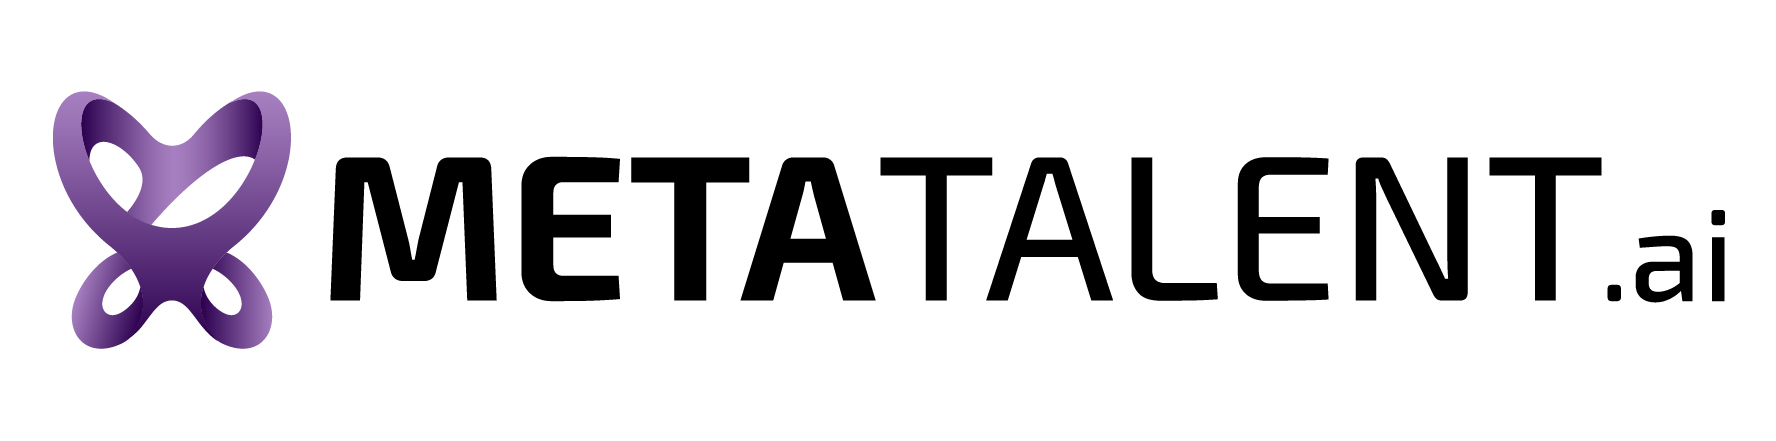 metatalent logo